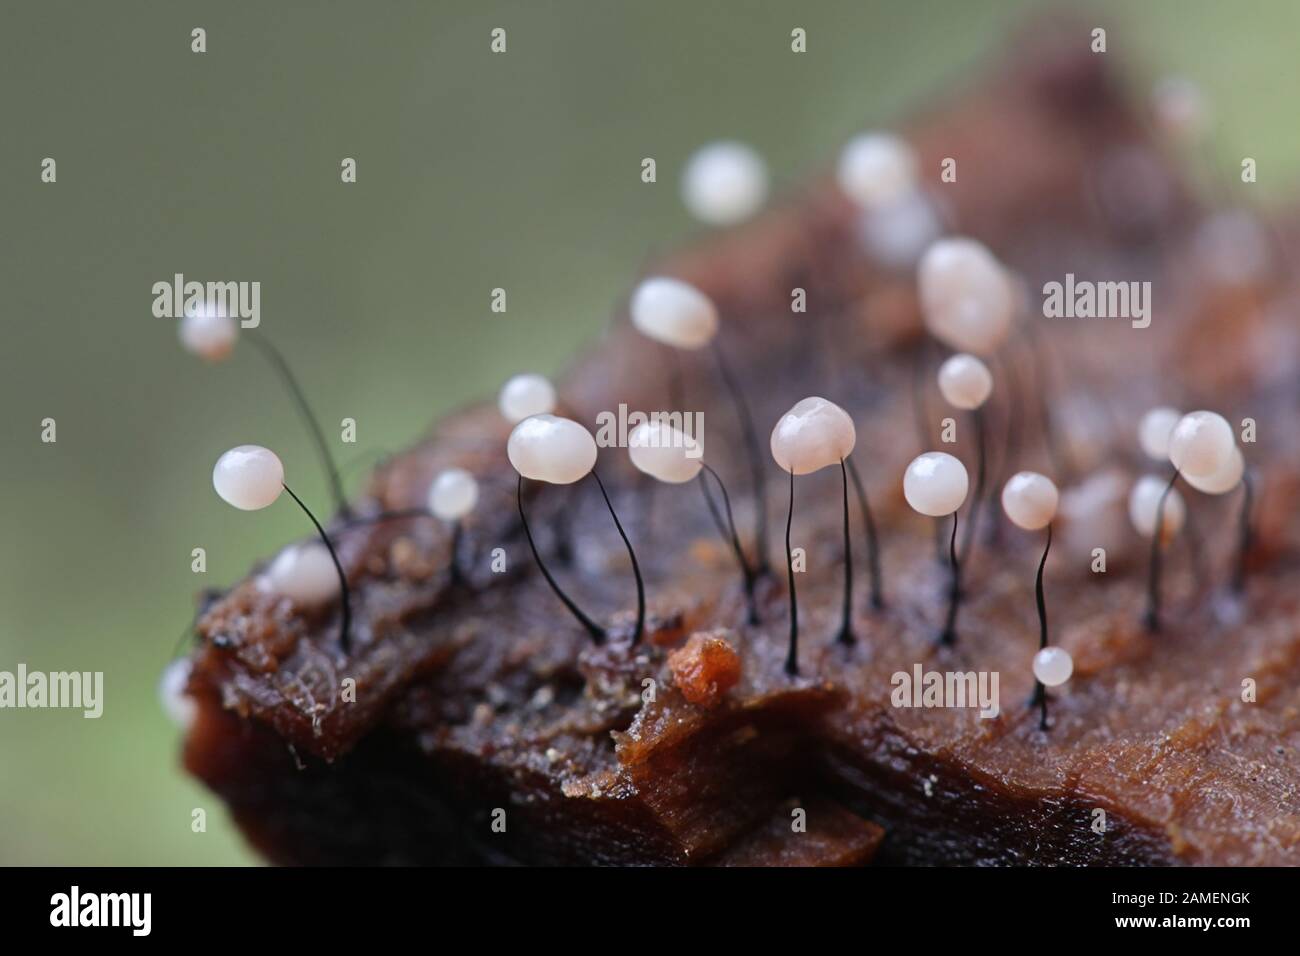 Comatricha nigra, a plasmodial slime mold, sporangia on decaying wood in Finland Stock Photo